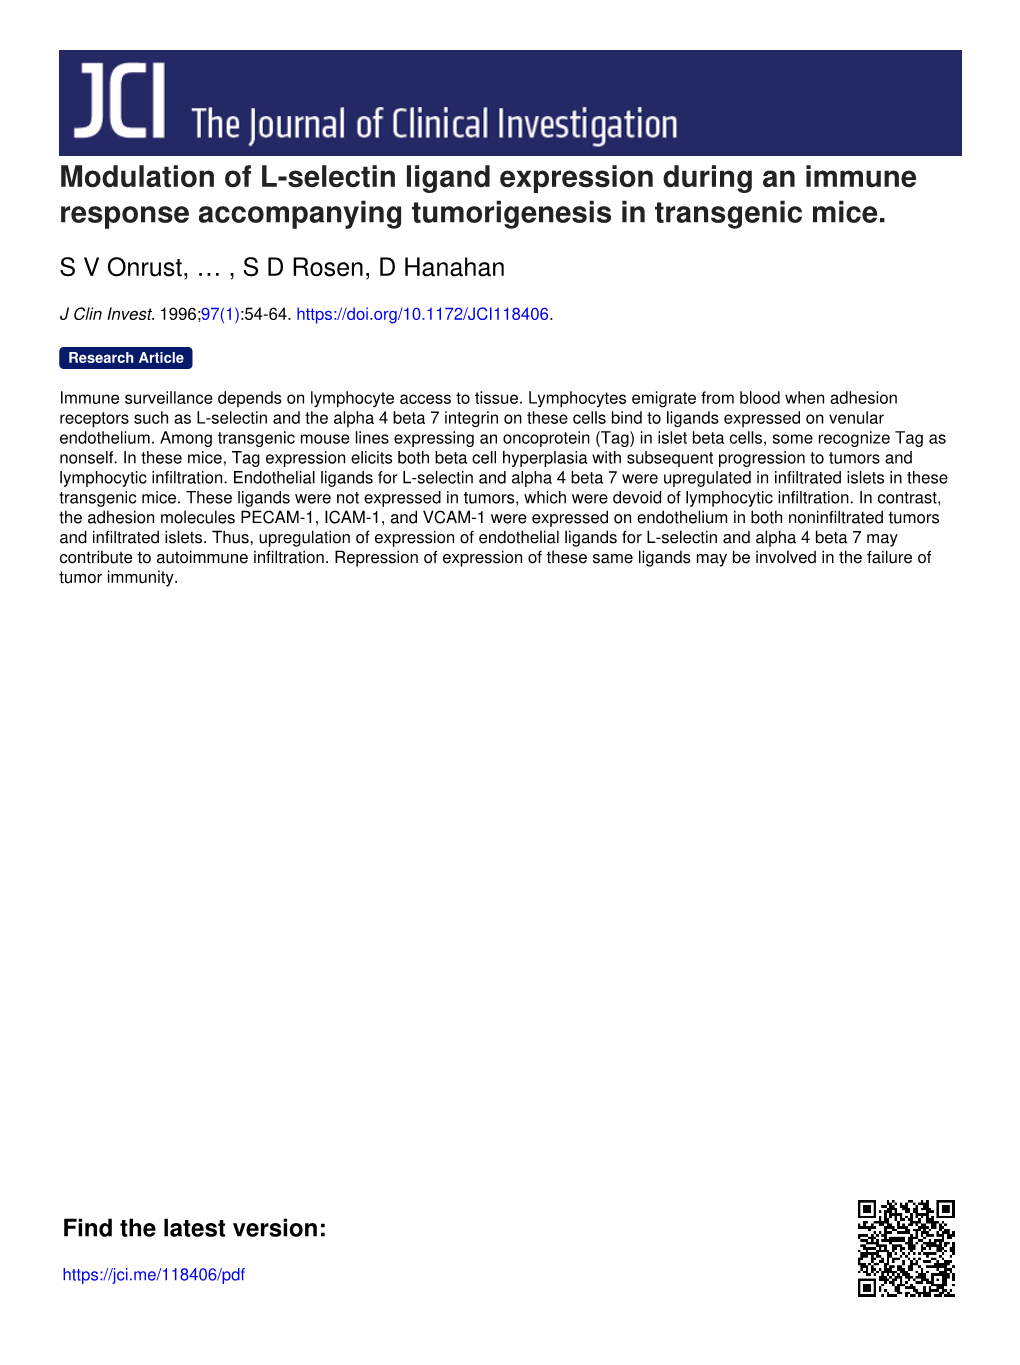 Modulation of L-Selectin Ligand Expression During an Immune Response Accompanying Tumorigenesis in Transgenic Mice